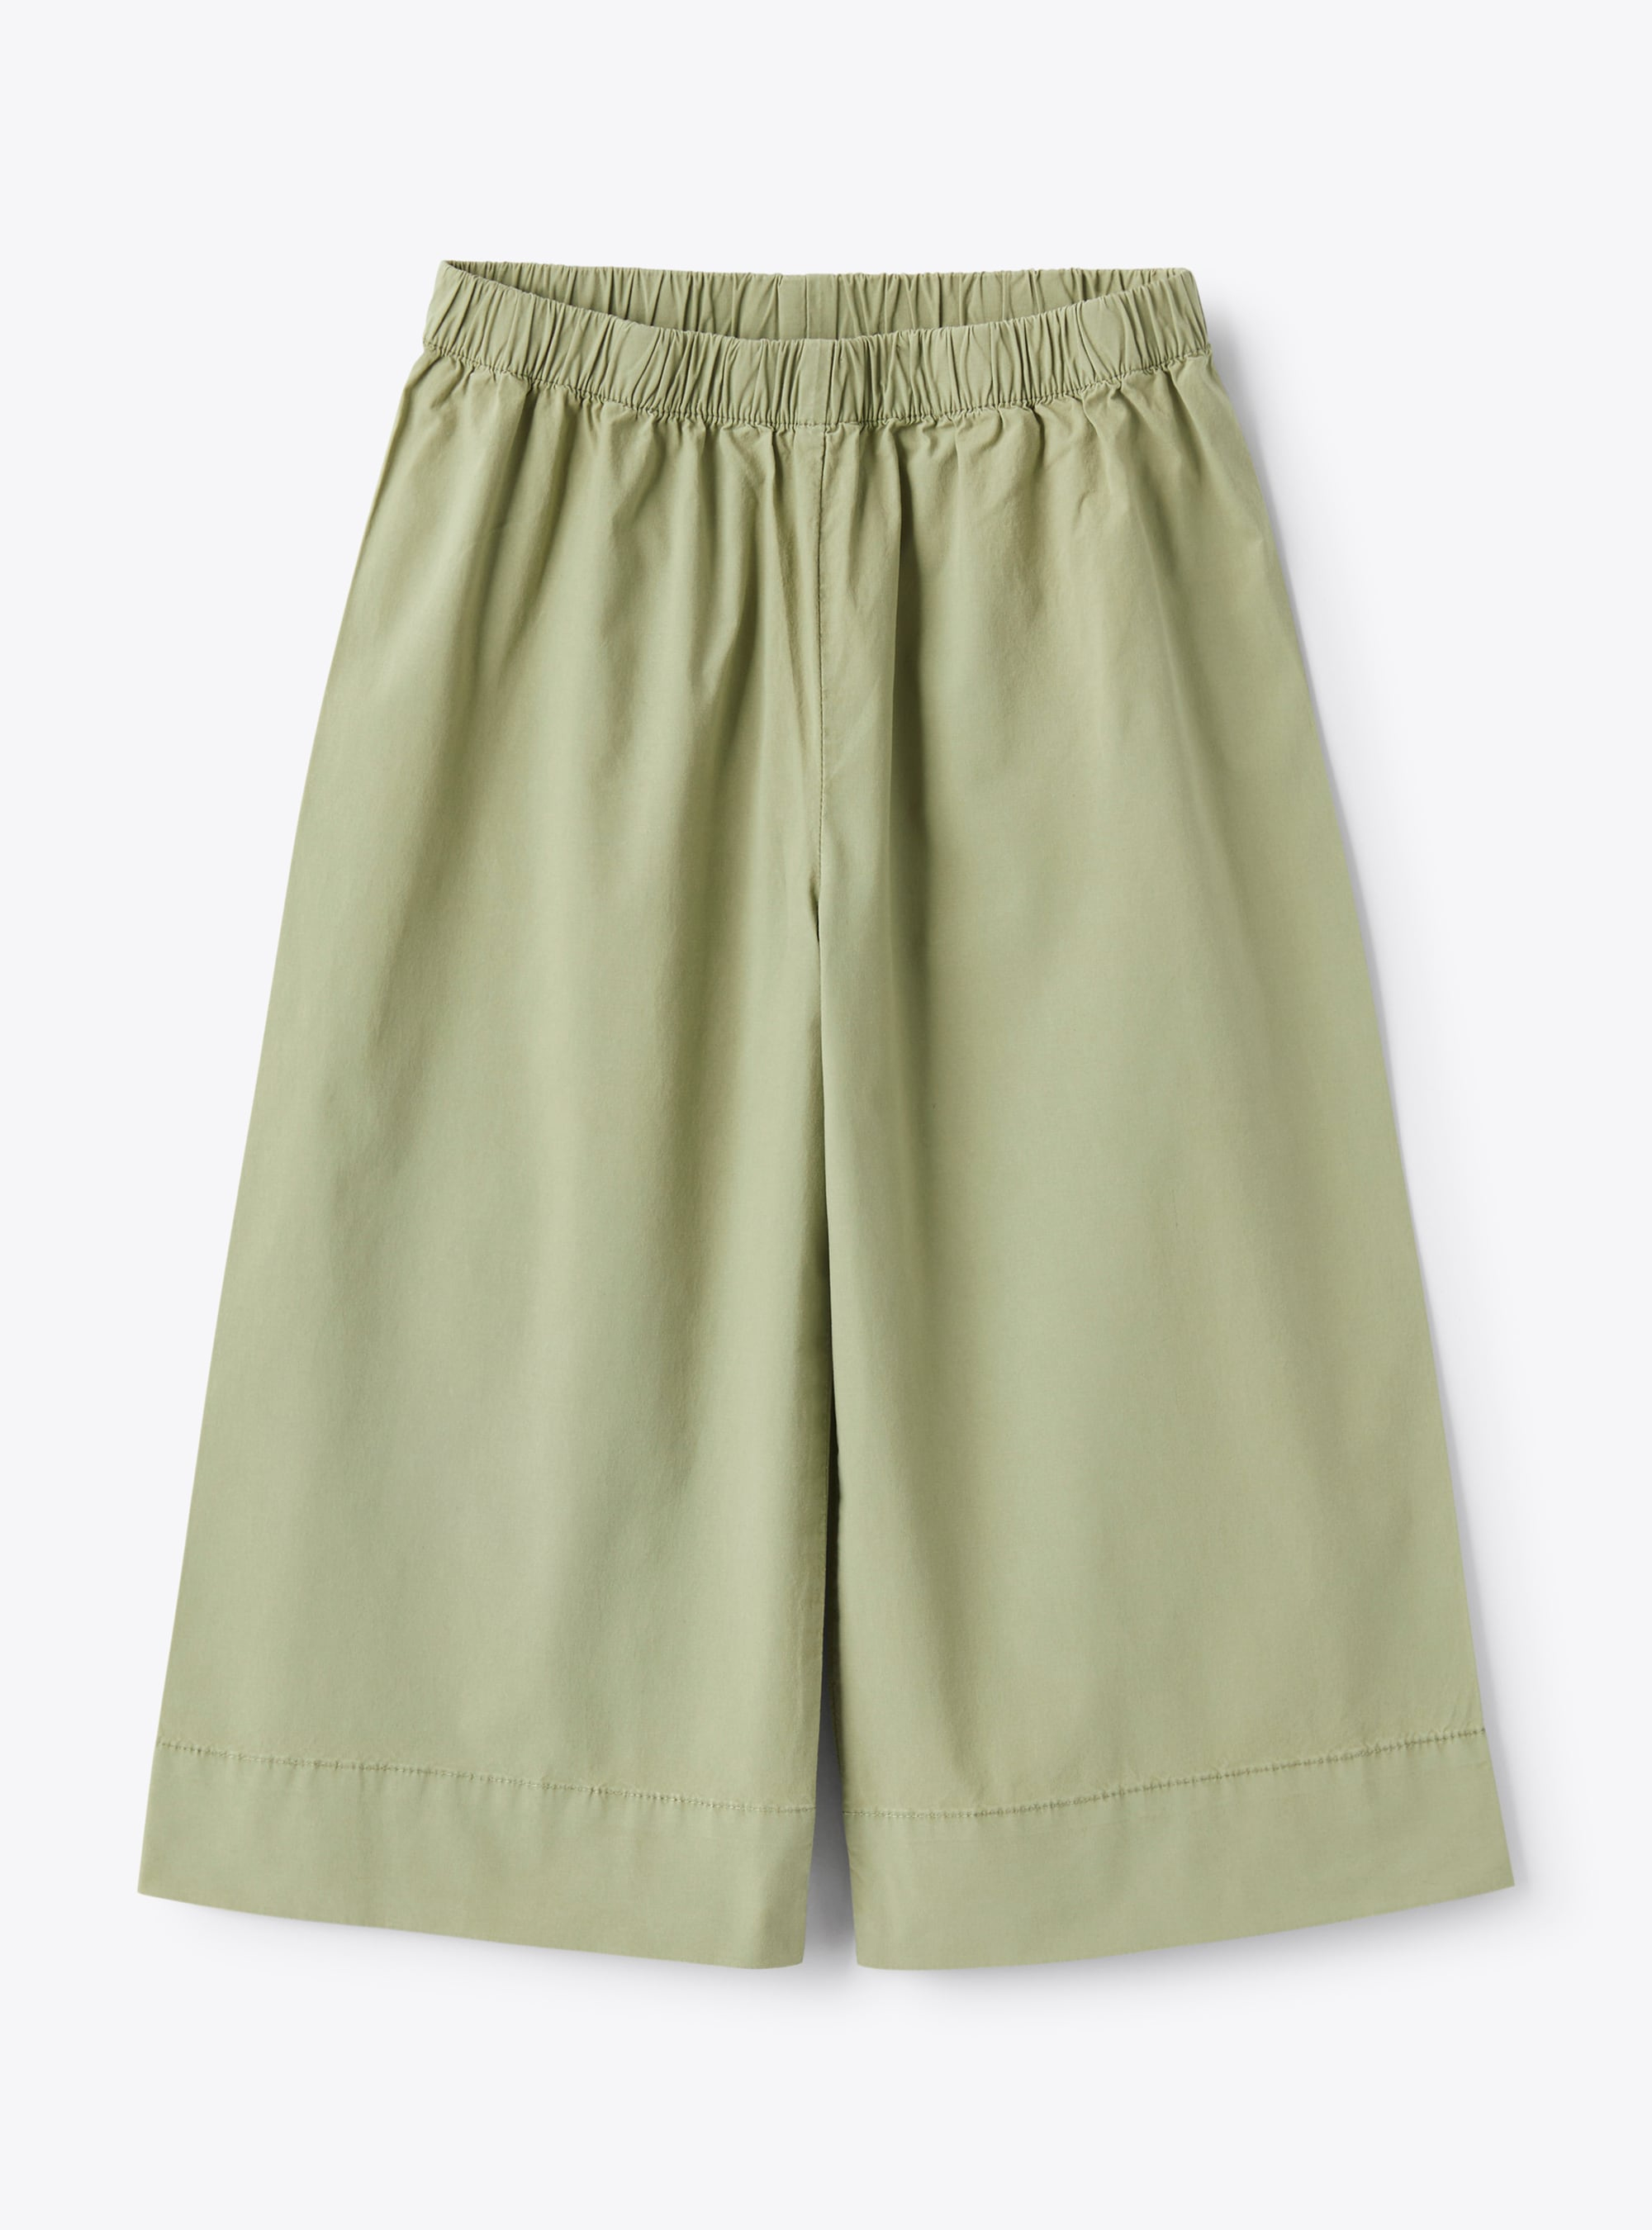 Capri pants in stretch sage-green poplin - Trousers - Il Gufo